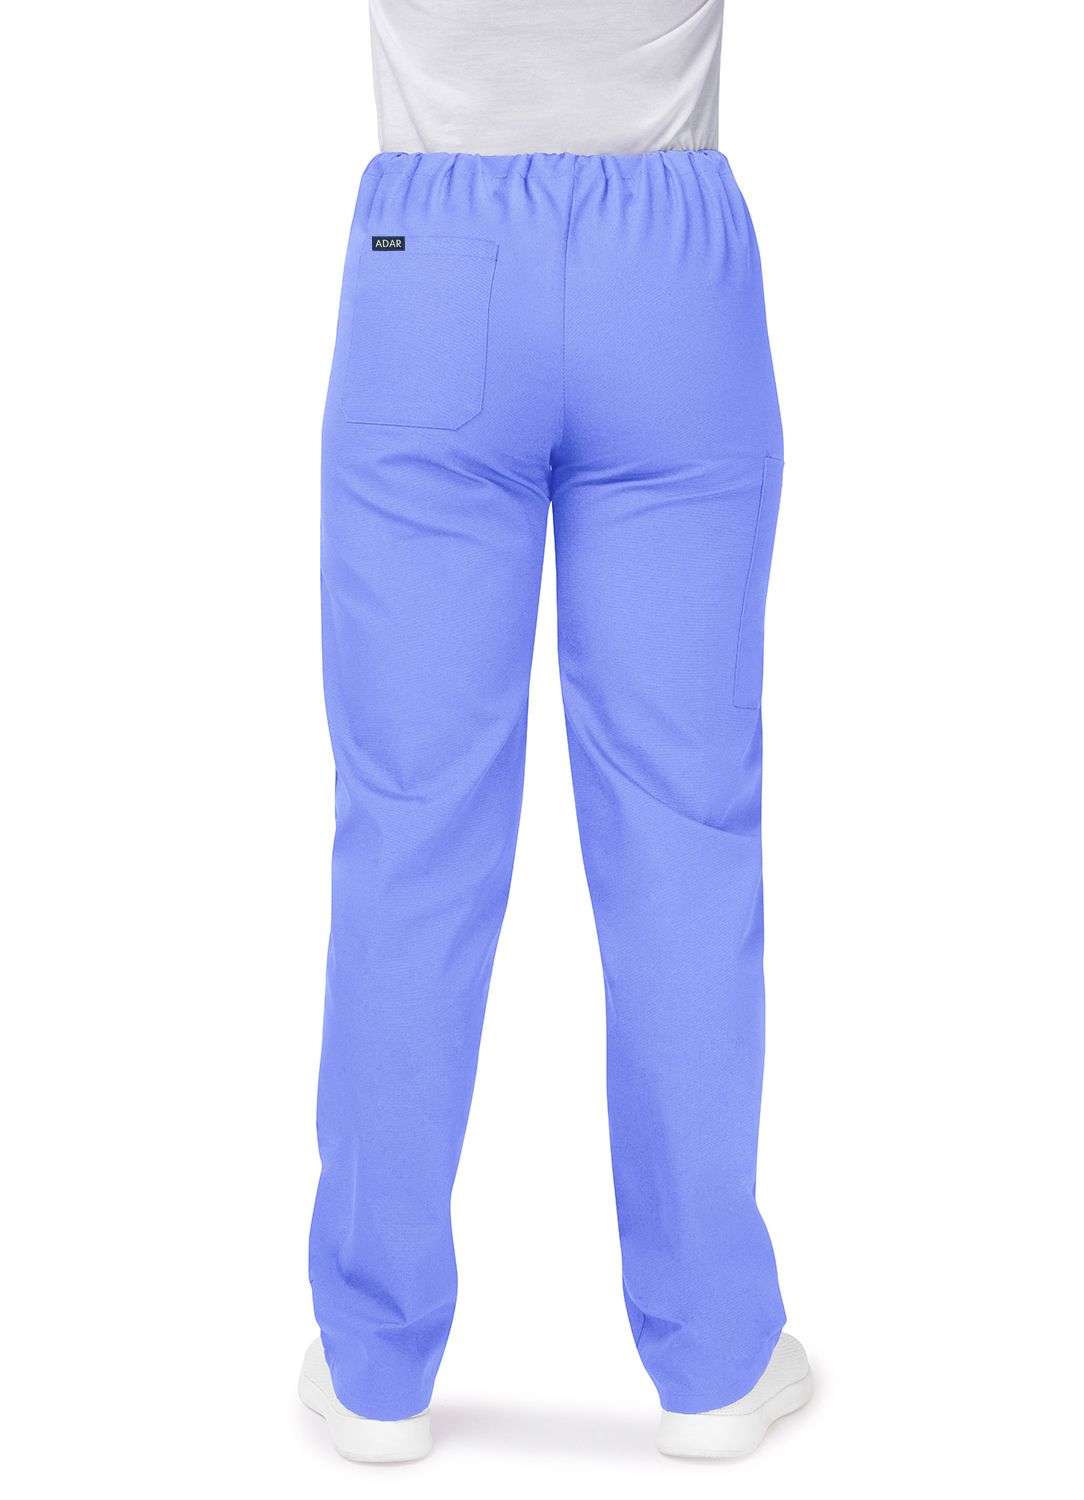 Unisex Drawstring Pants by Adar XS-5X / Ceil Blue